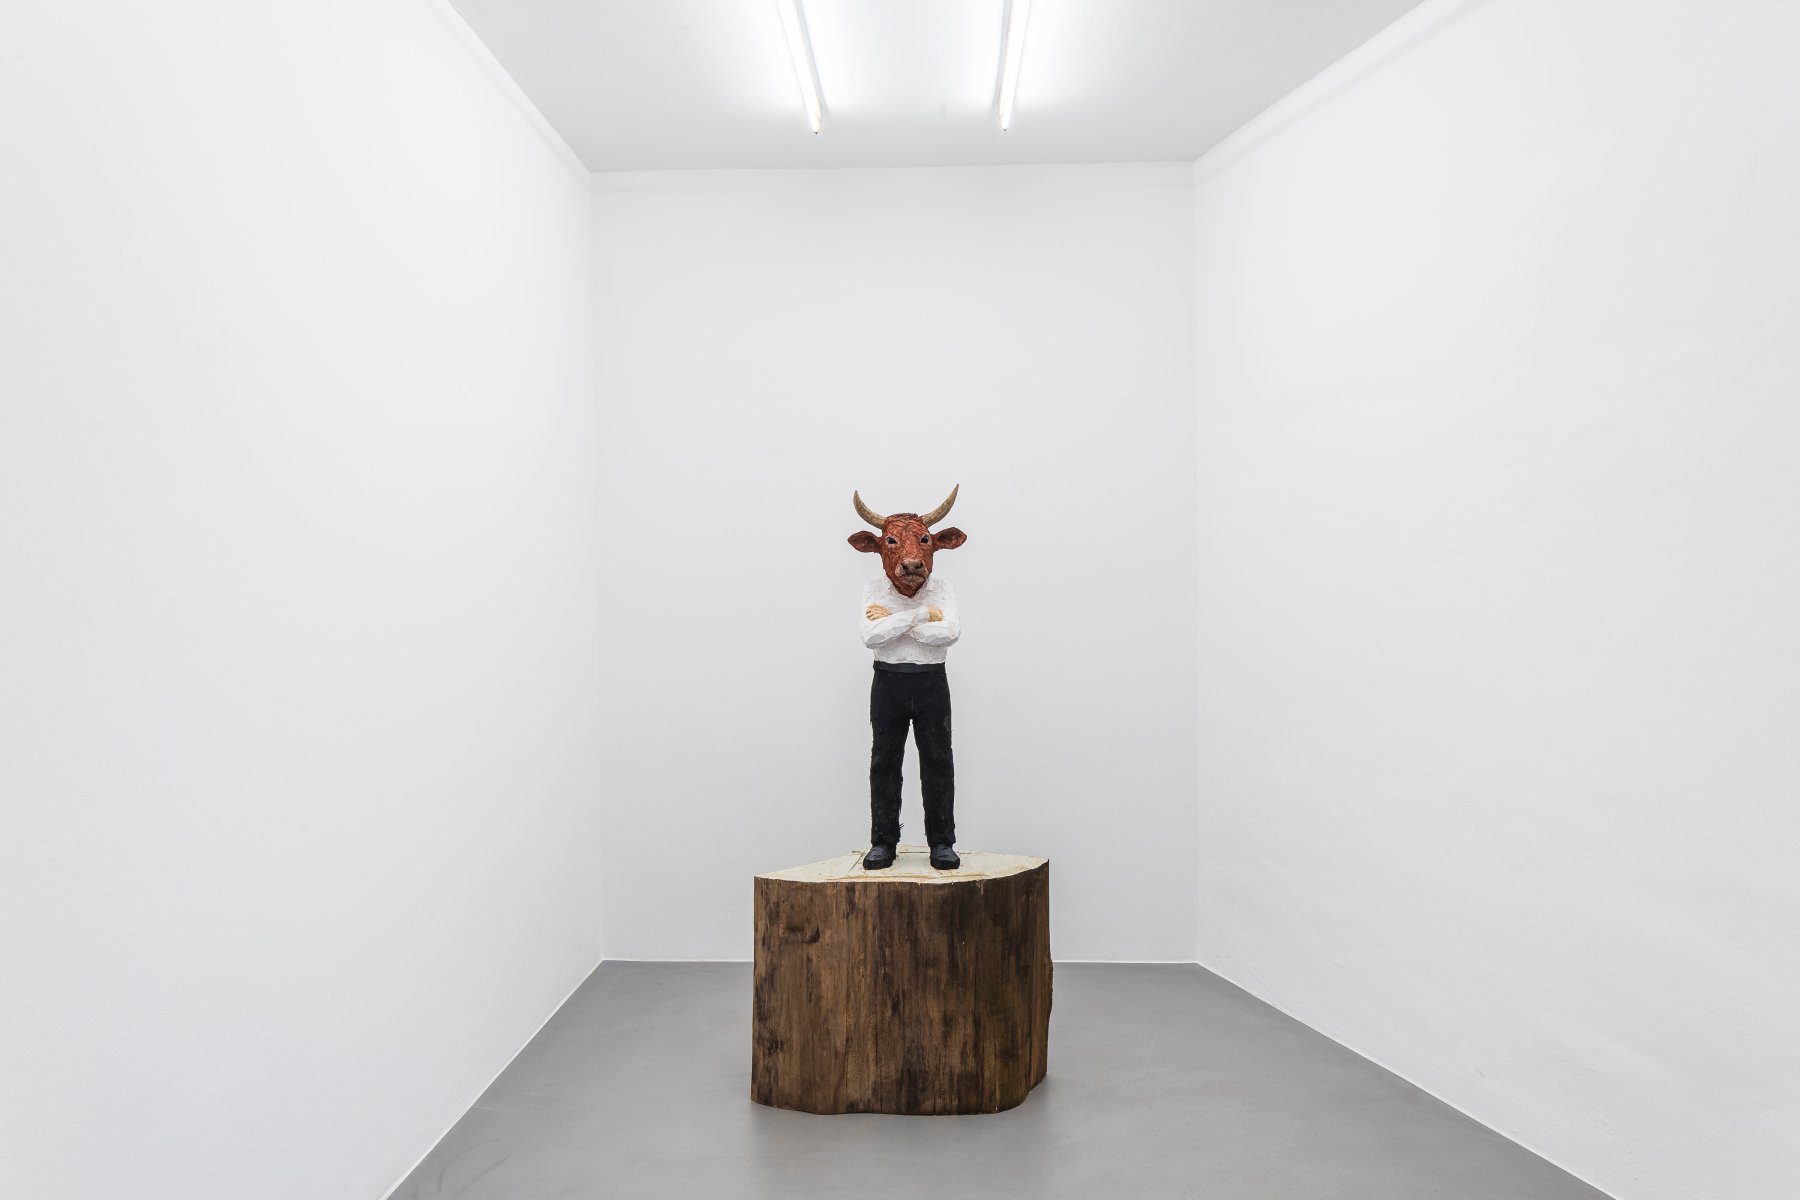 Installation image for Stephan Balkenhol, at Mai 36 Galerie